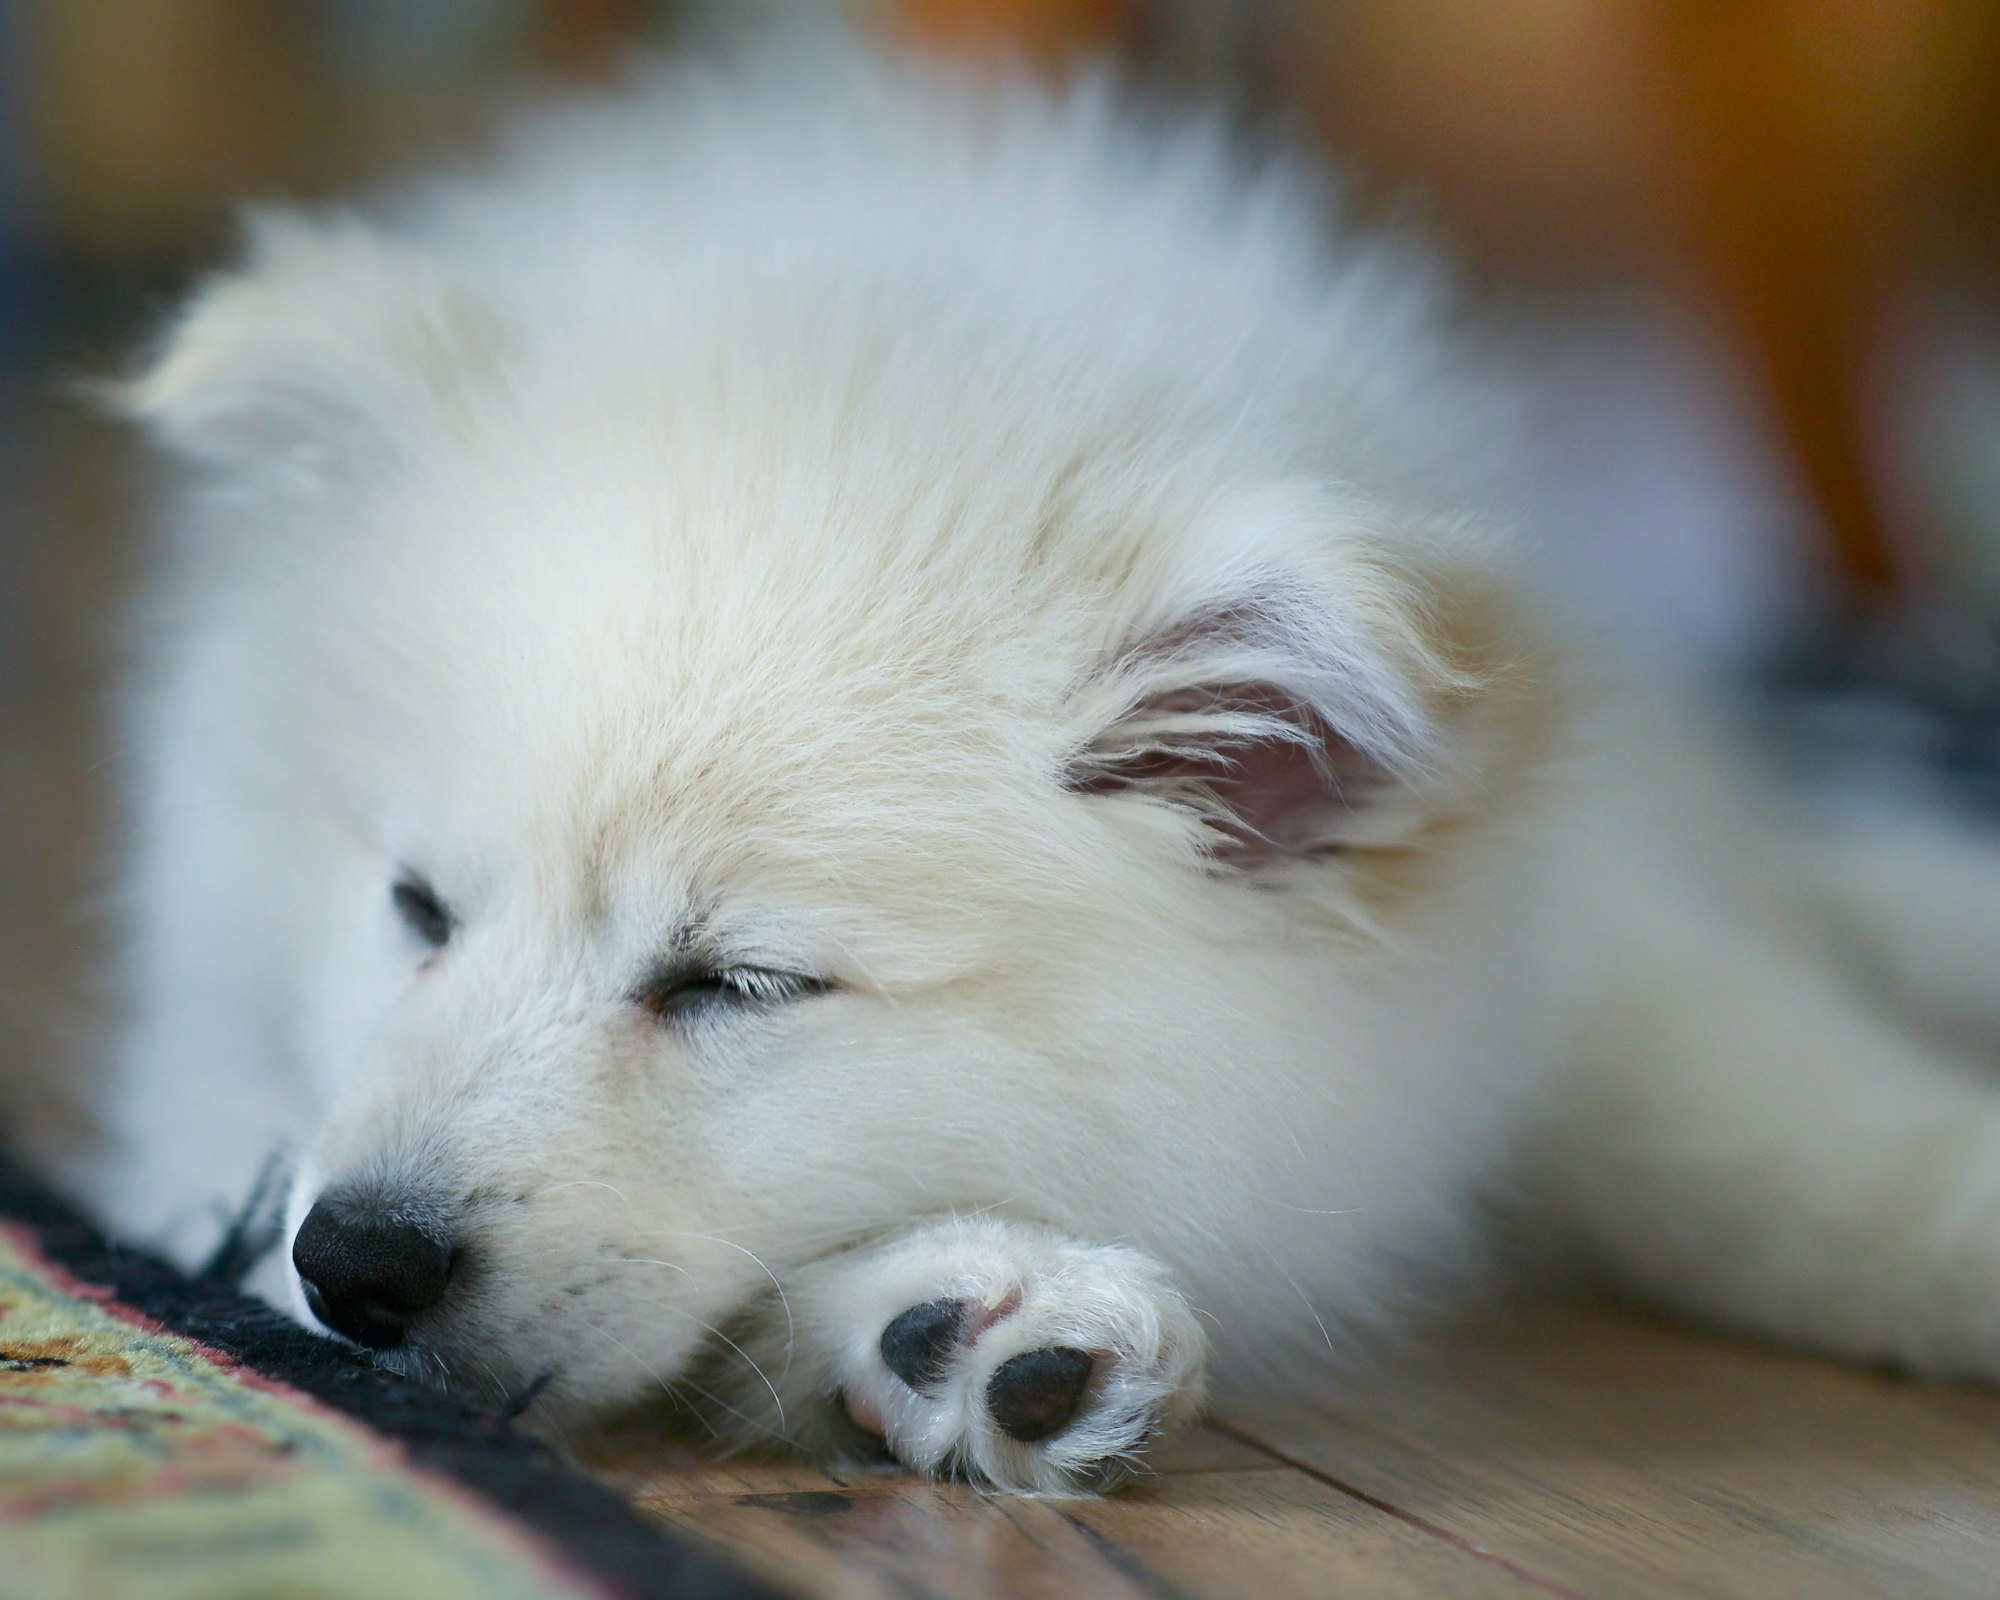 Adorable sleeping puppy dog named Rambo.